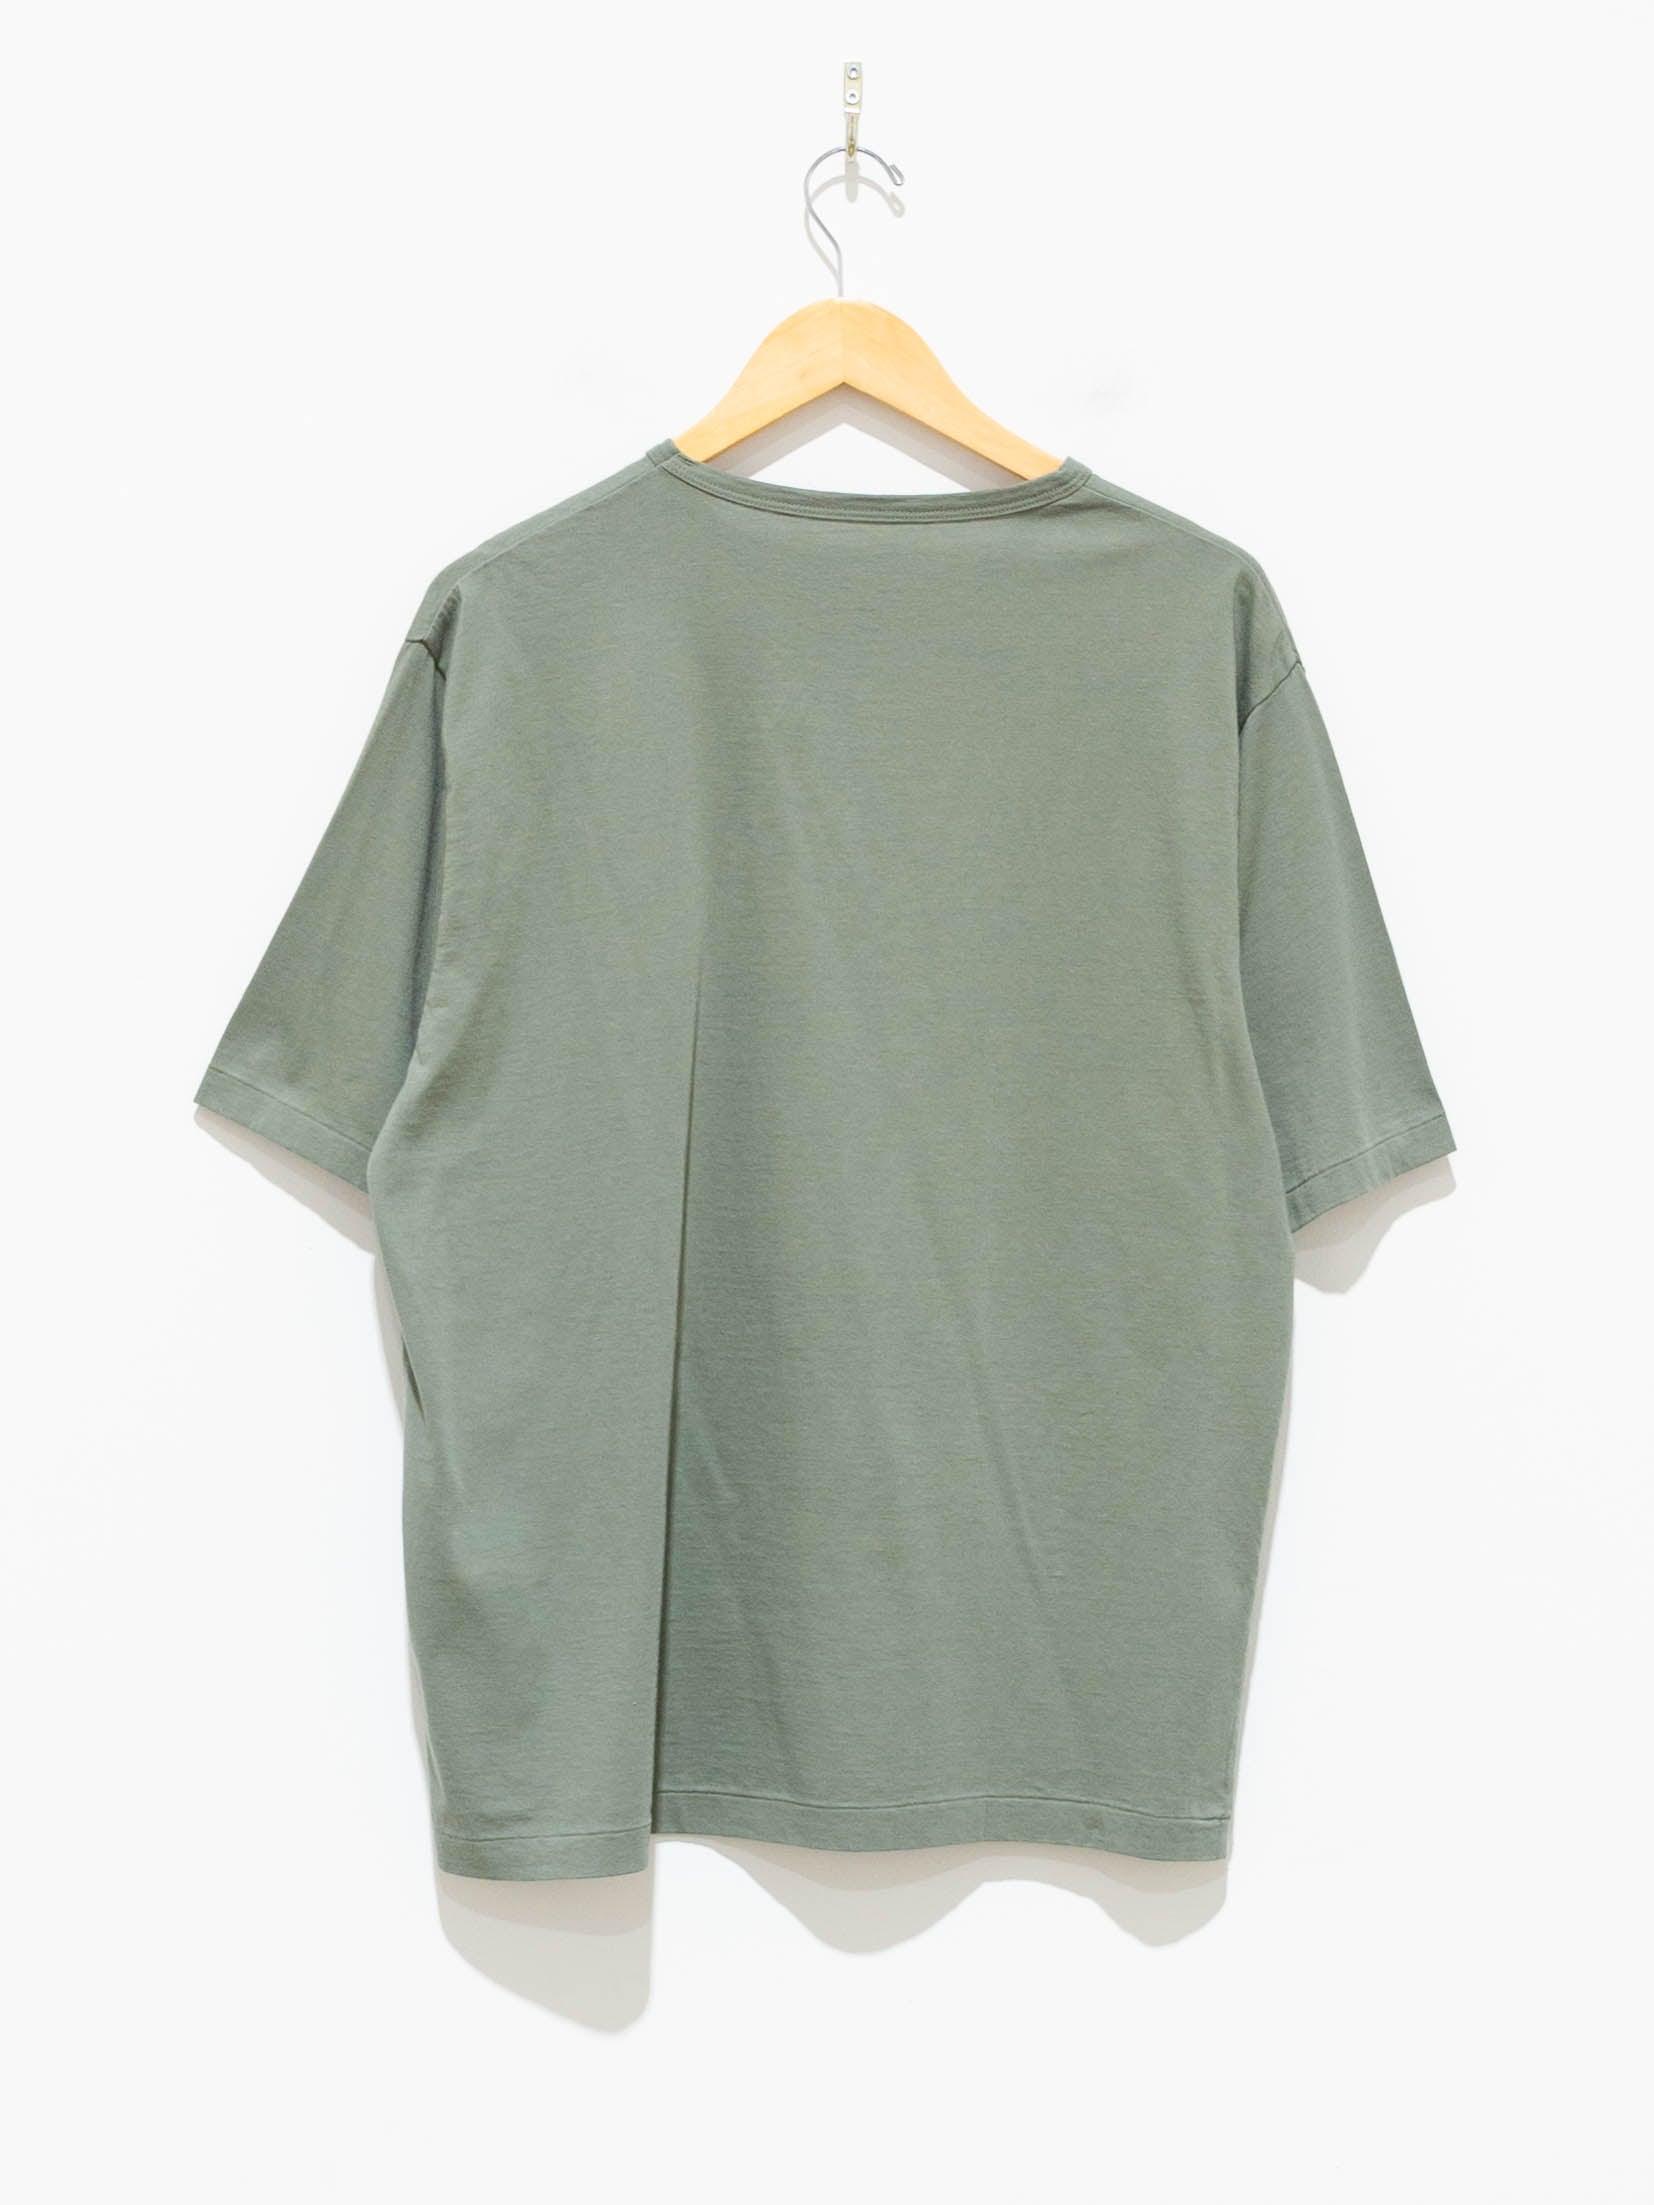 Namu Shop - Phlannel Light Suvin T-Shirt - Khaki Green